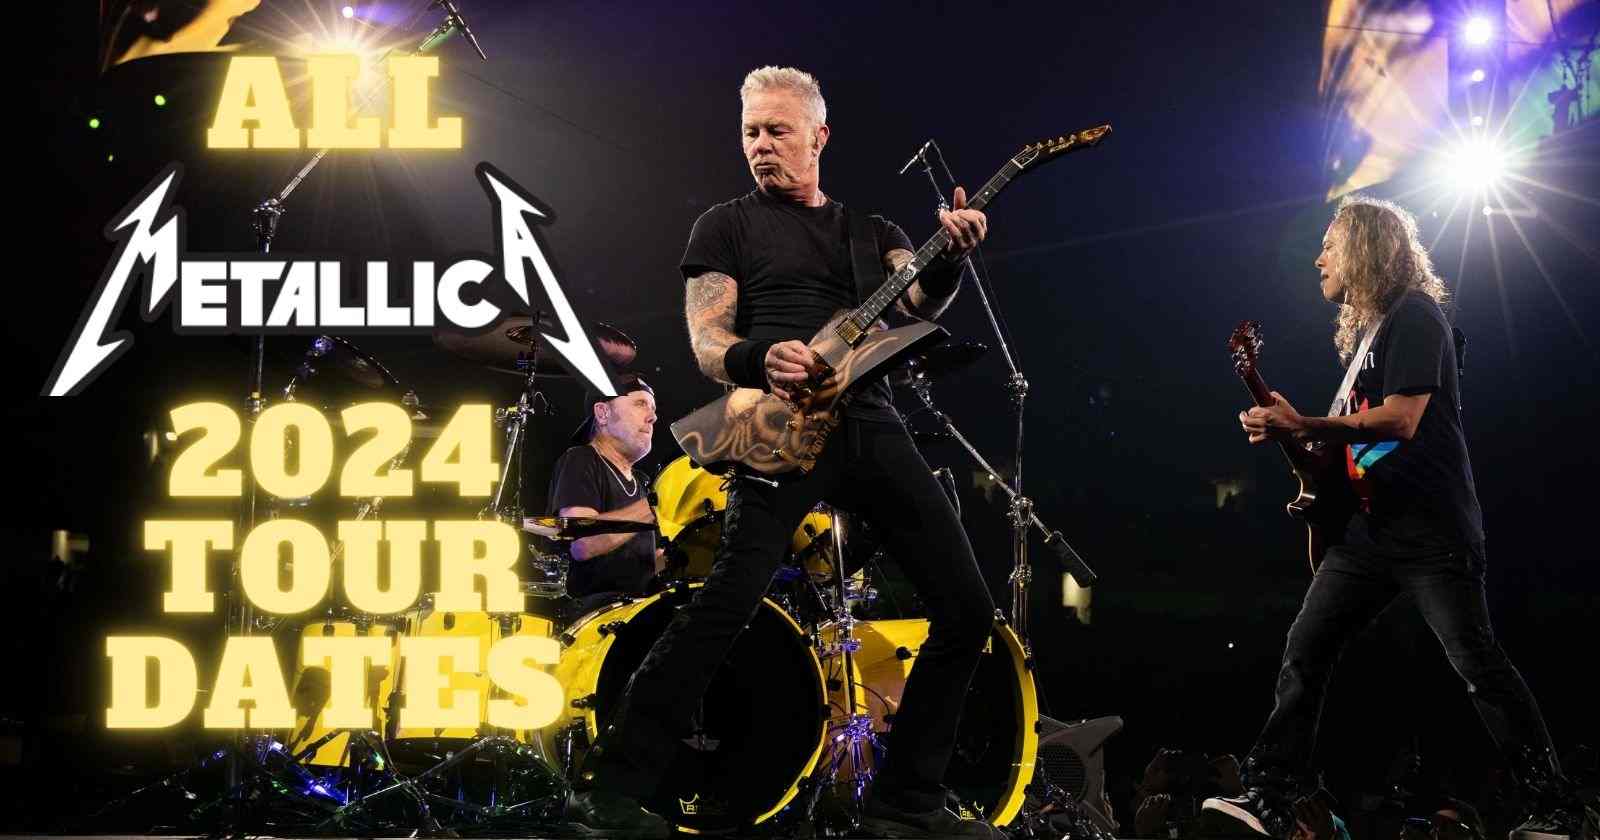 Metallica 2024 tour dates